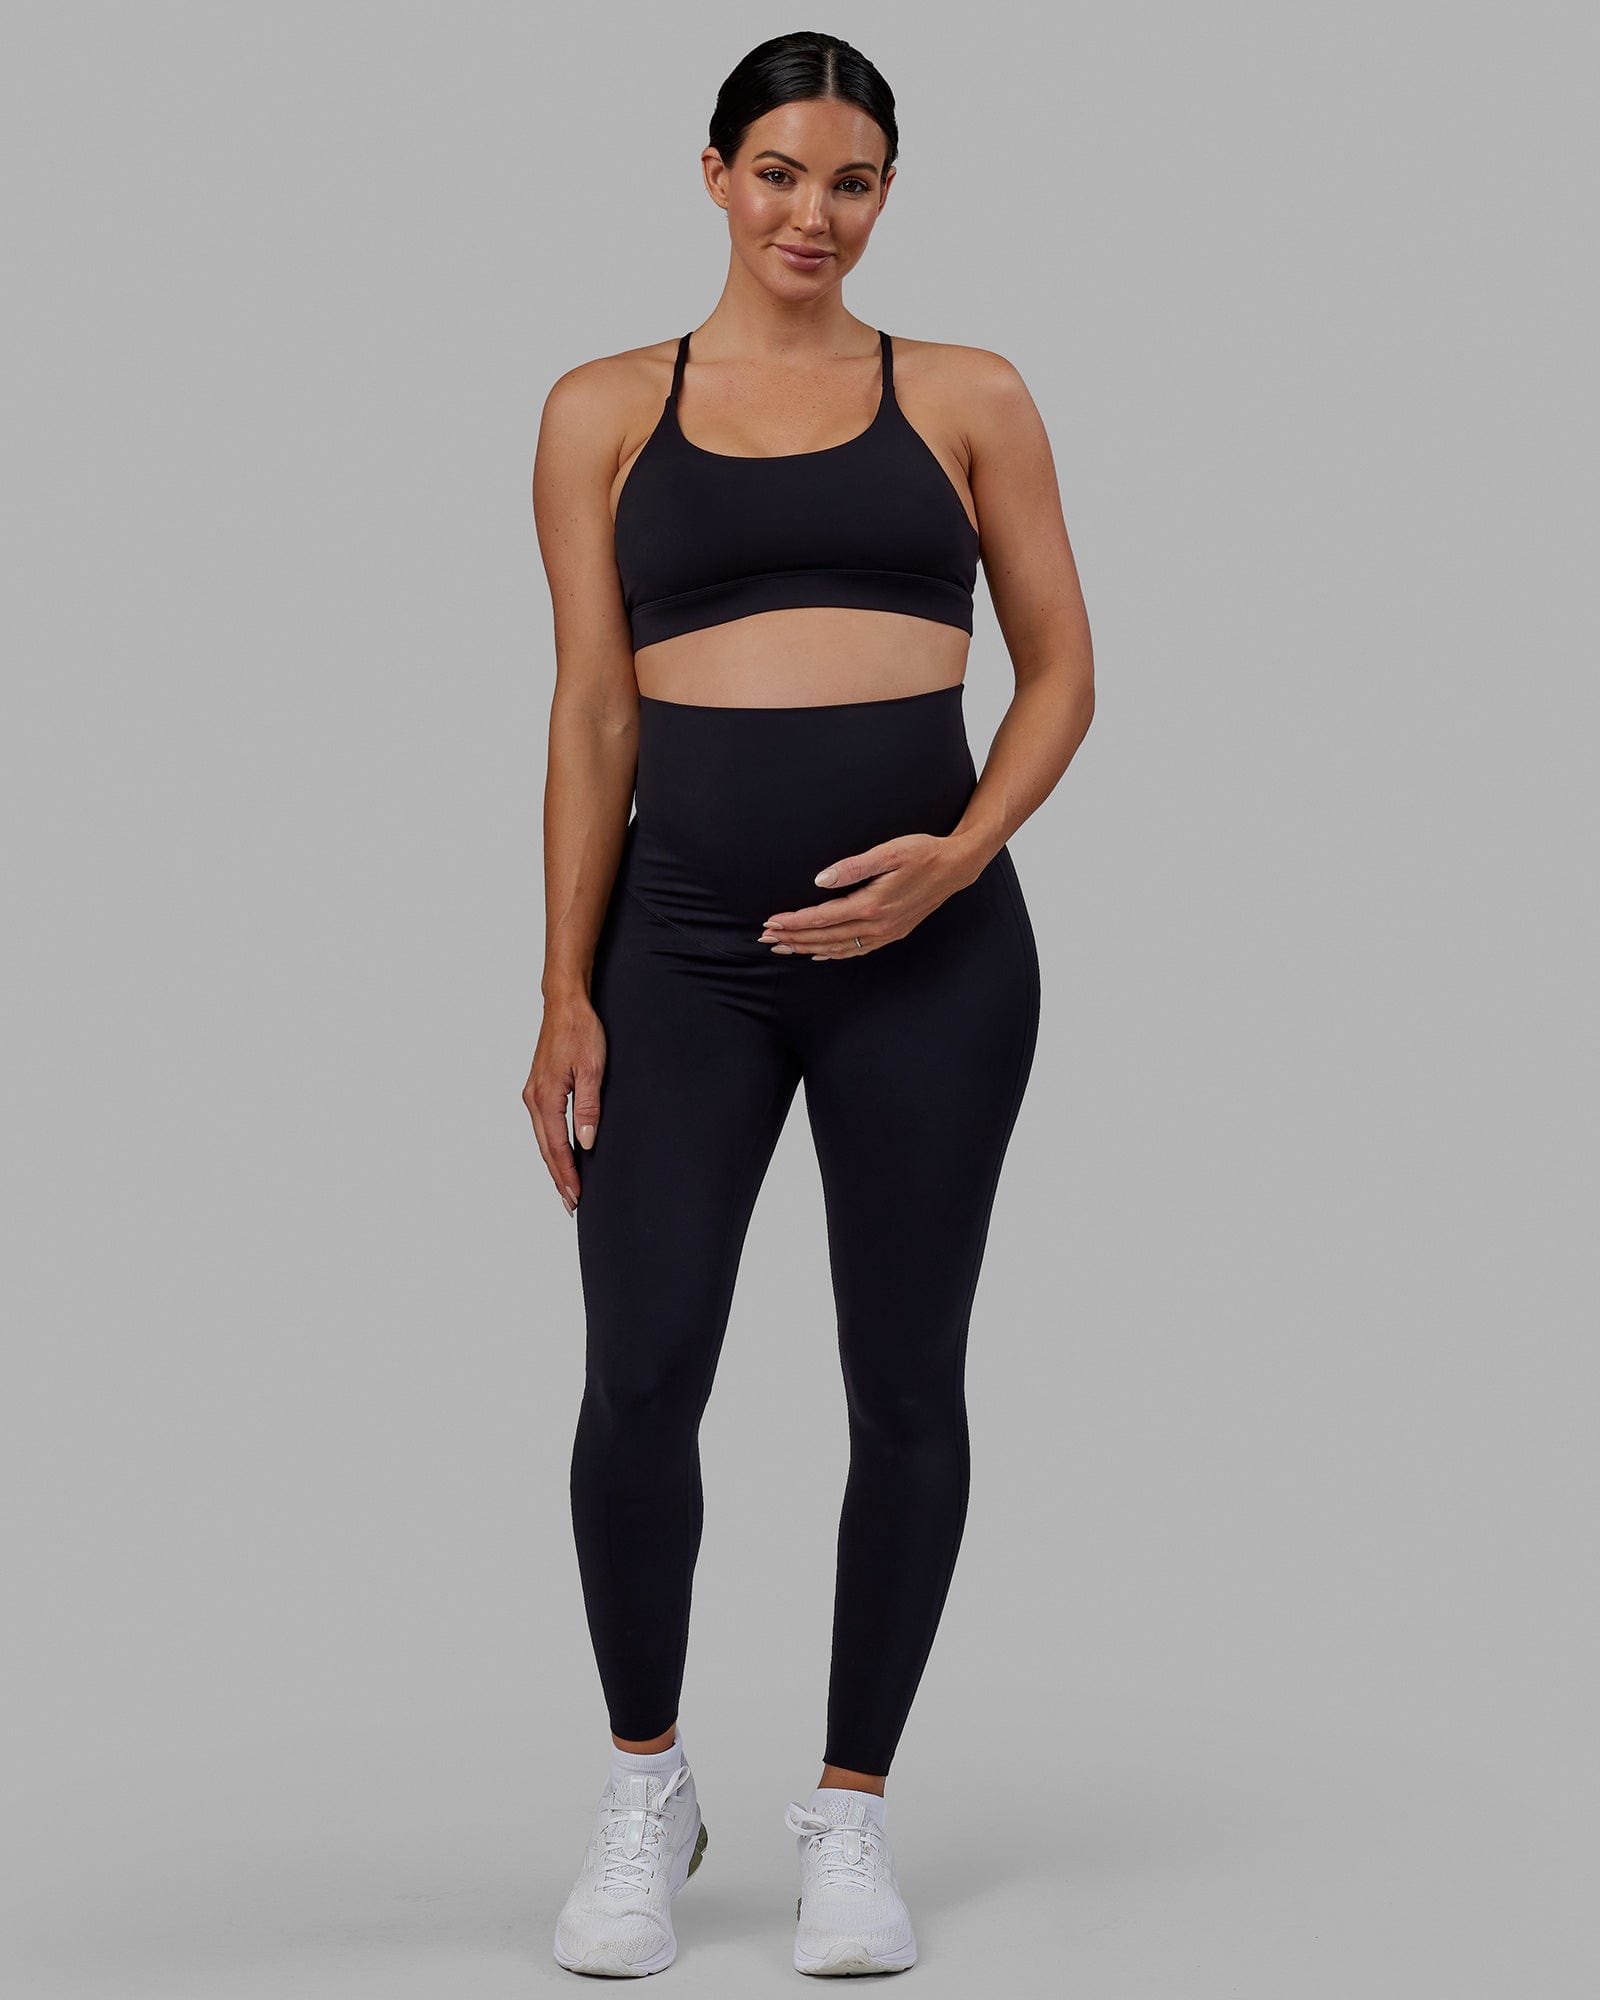 Buy Pregnancy Leggings Online| Ink Blue Leggings | The Mommy Collective